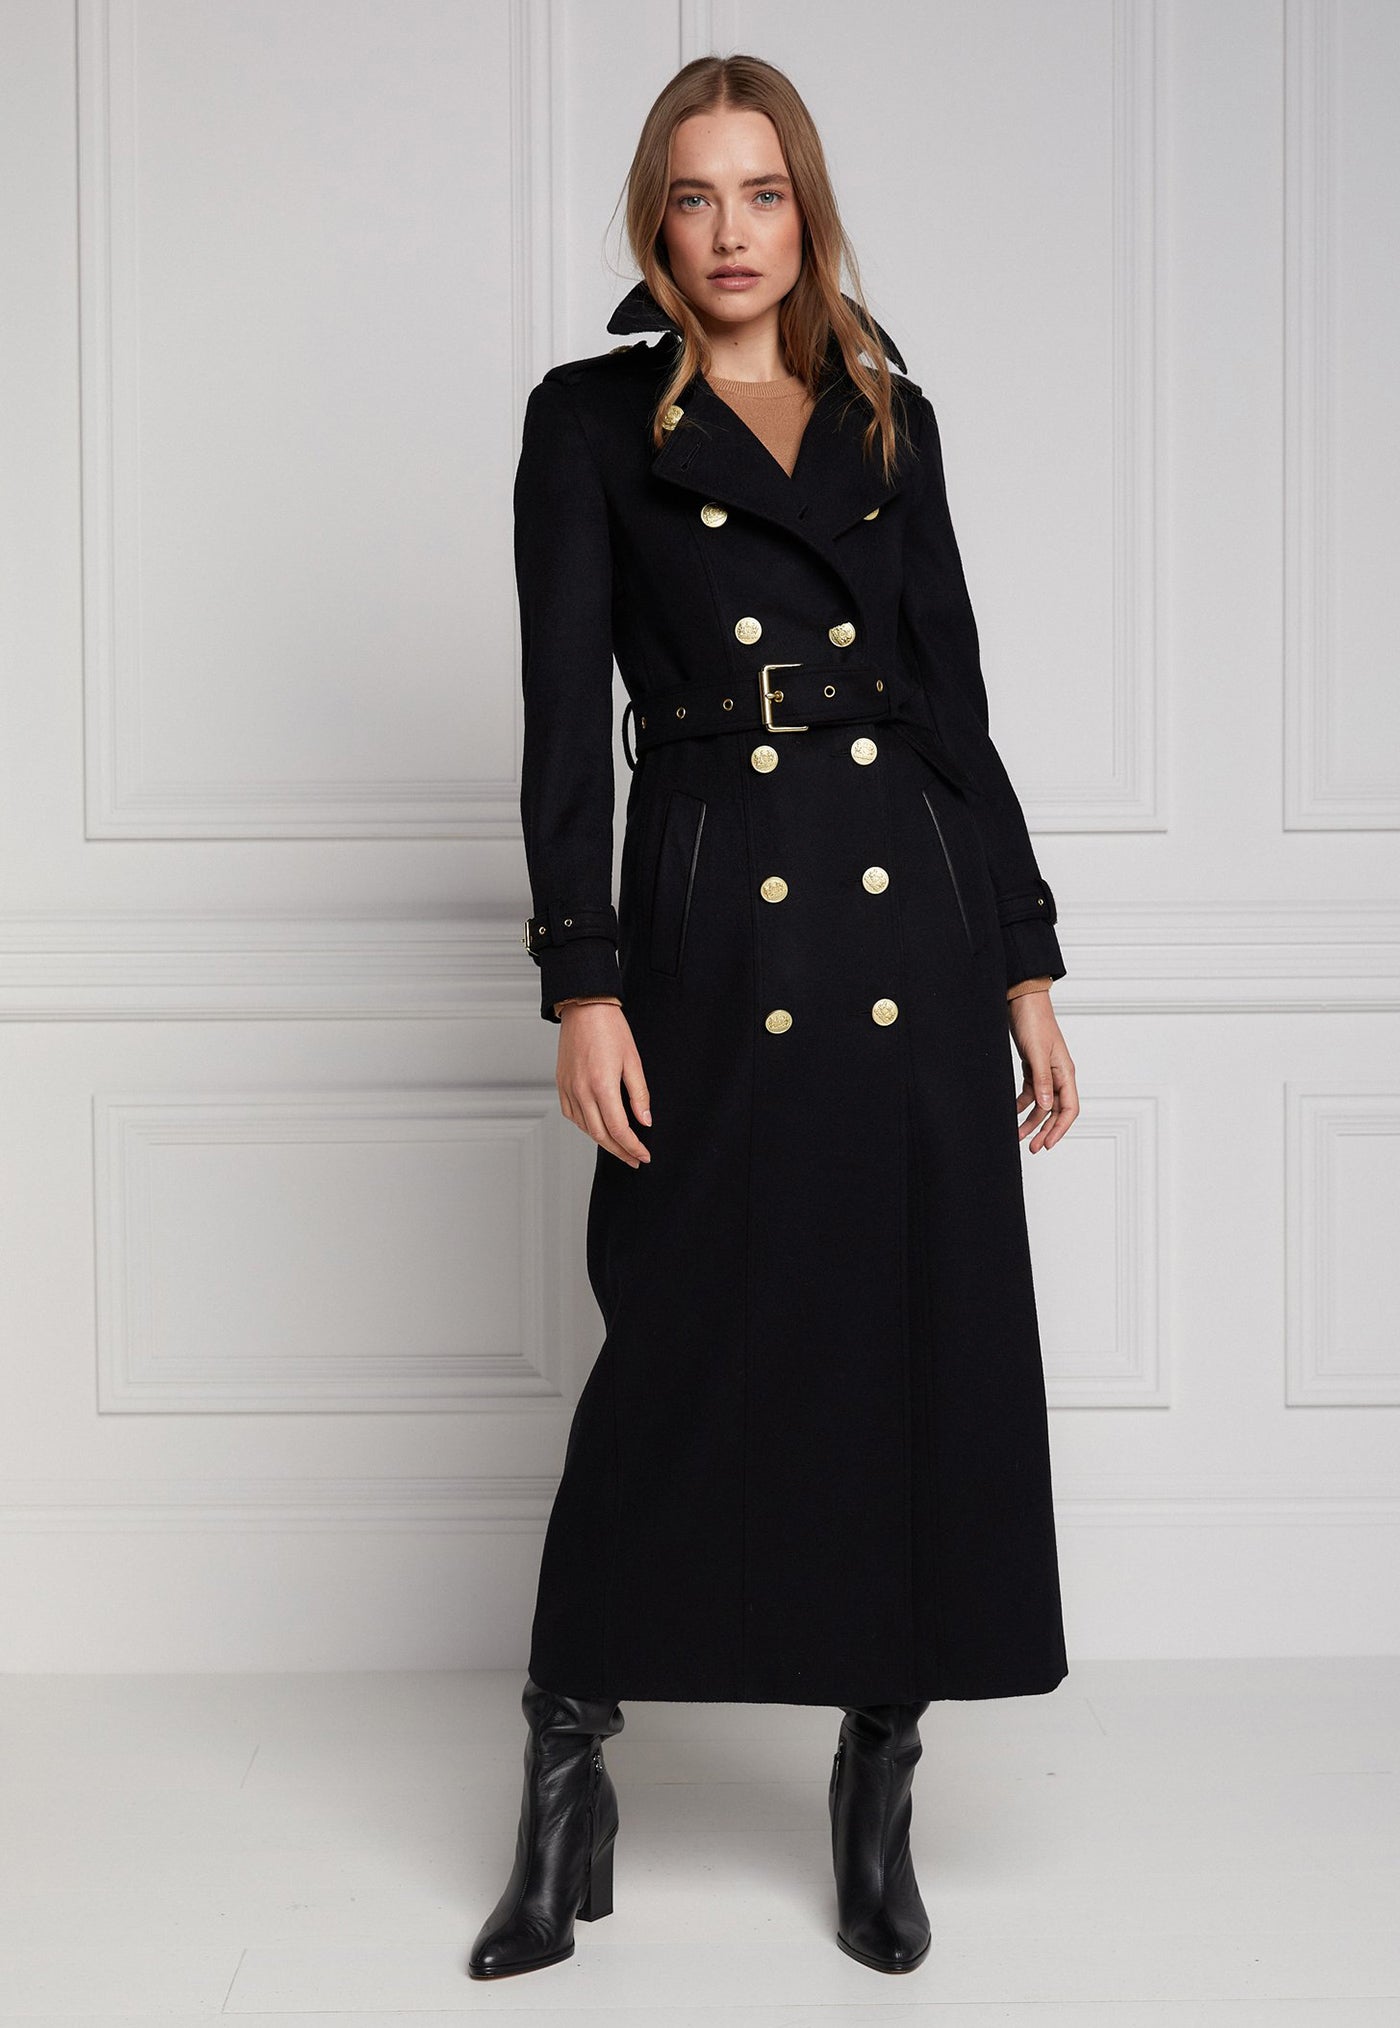 Marlborough Trench Coat Full Length - Soft Black sold by Angel Divine